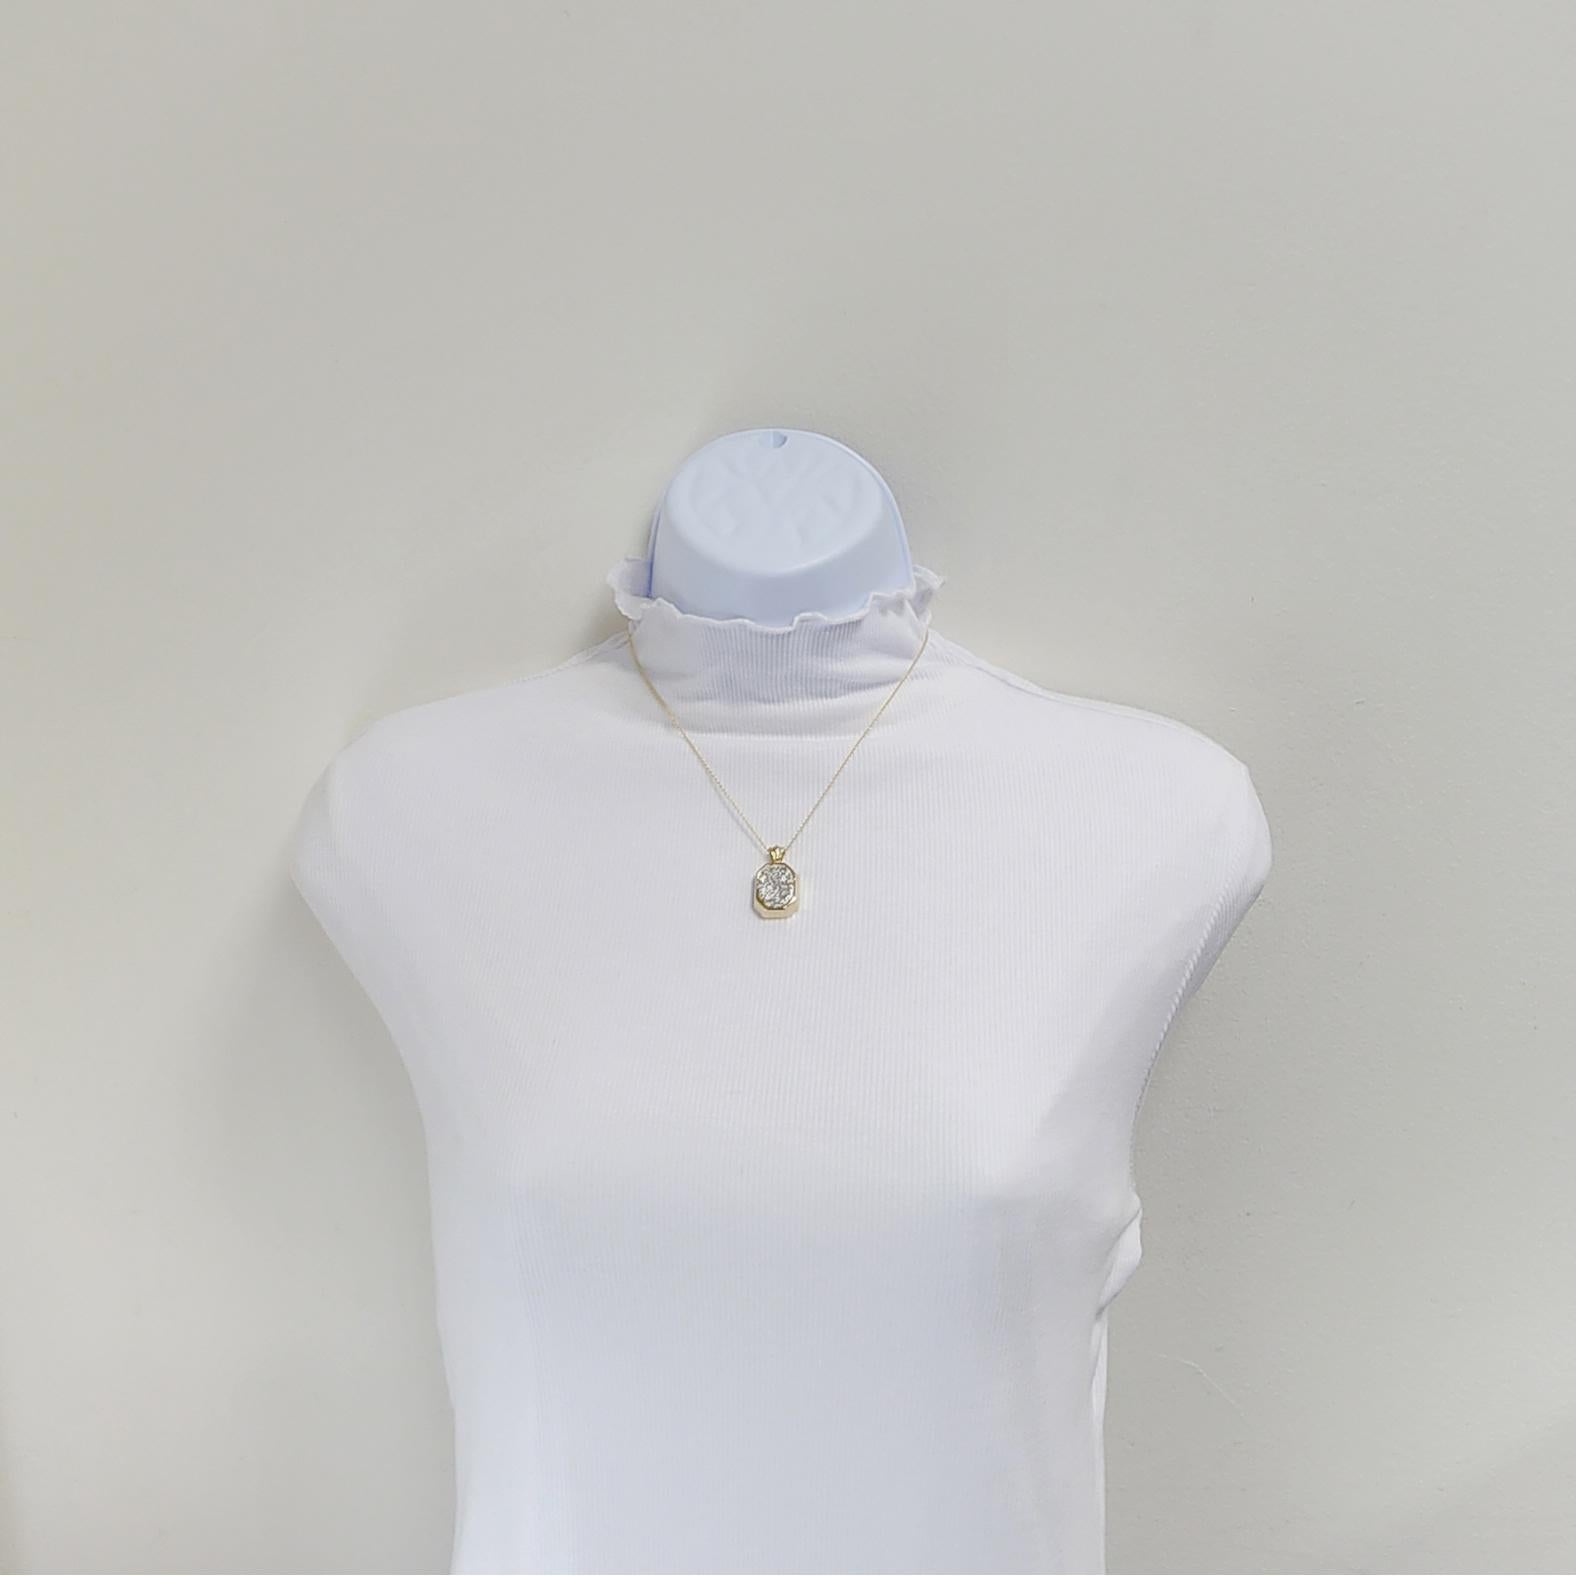 Round Cut White Diamond Pineapple Design Pendant Necklace in 14k